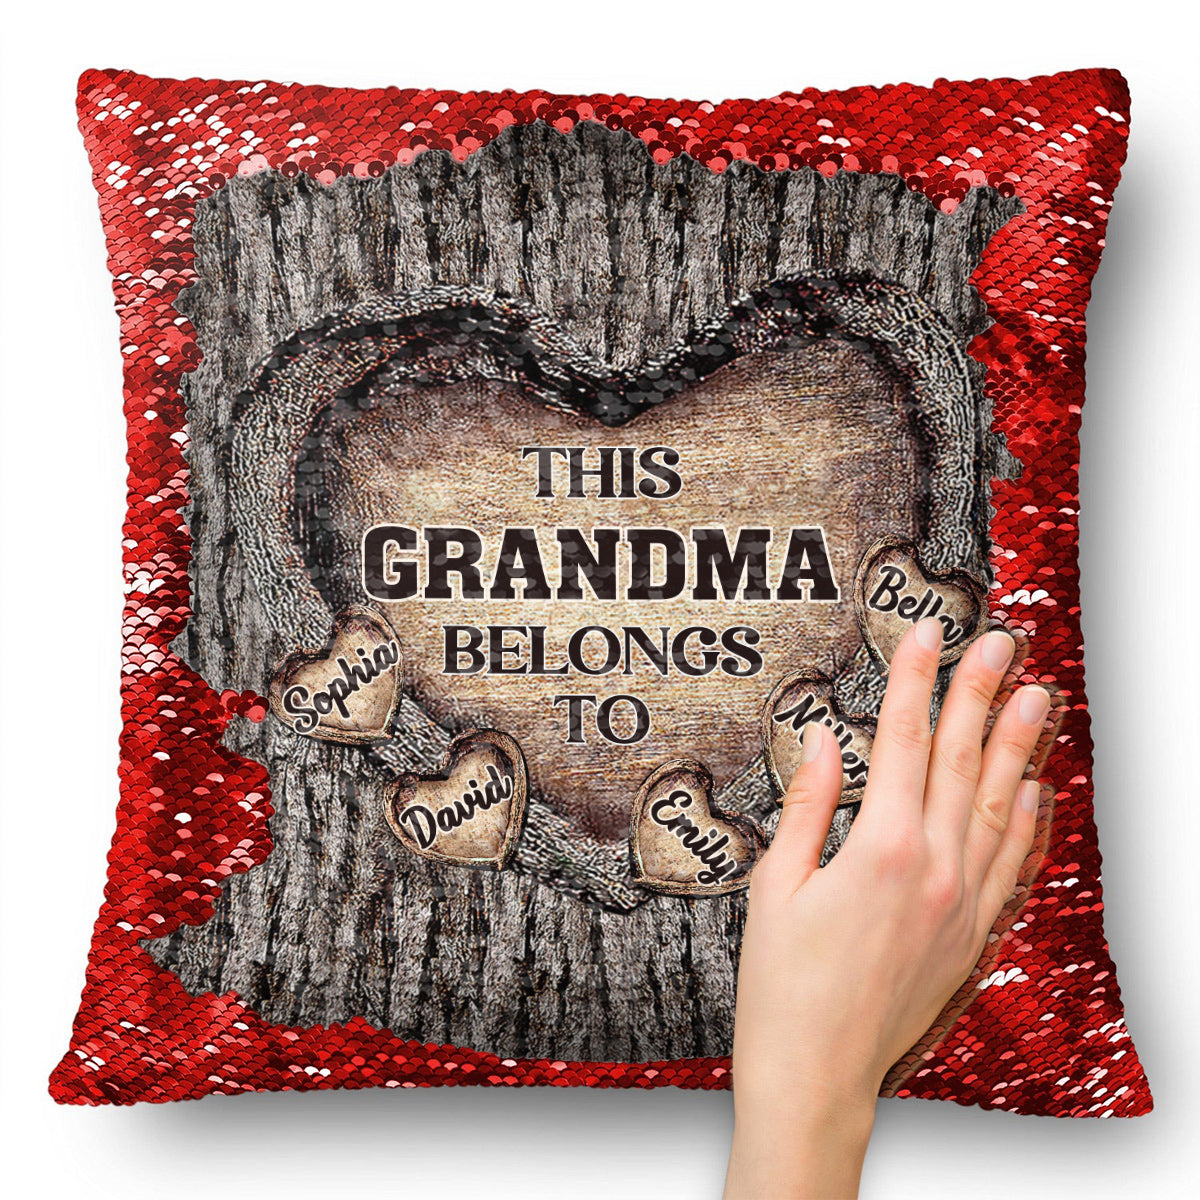 This Grandma Mom Mimi Nana Gigi Belongs To - Gift for grandma - Personalized Sequin Pillow Cover